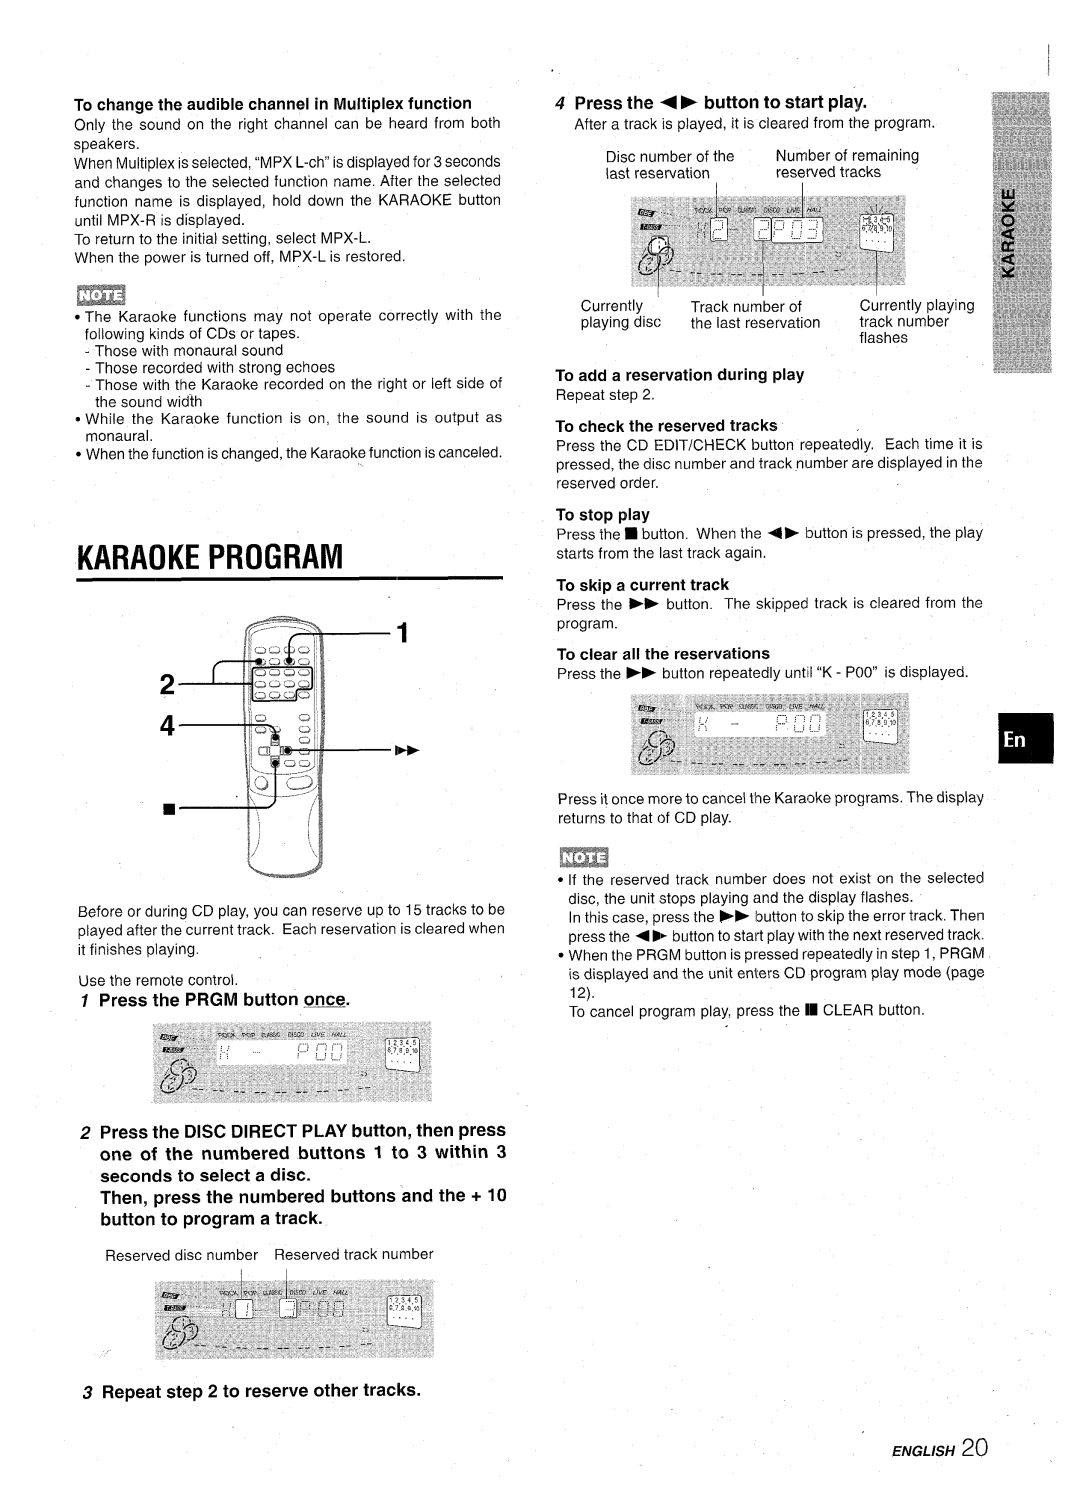 Aiwa CX-NA71 manual Karaoke Program, ENGLISH20, Press the PRGM button U, Repeat to reserve other tracks, To stop play 